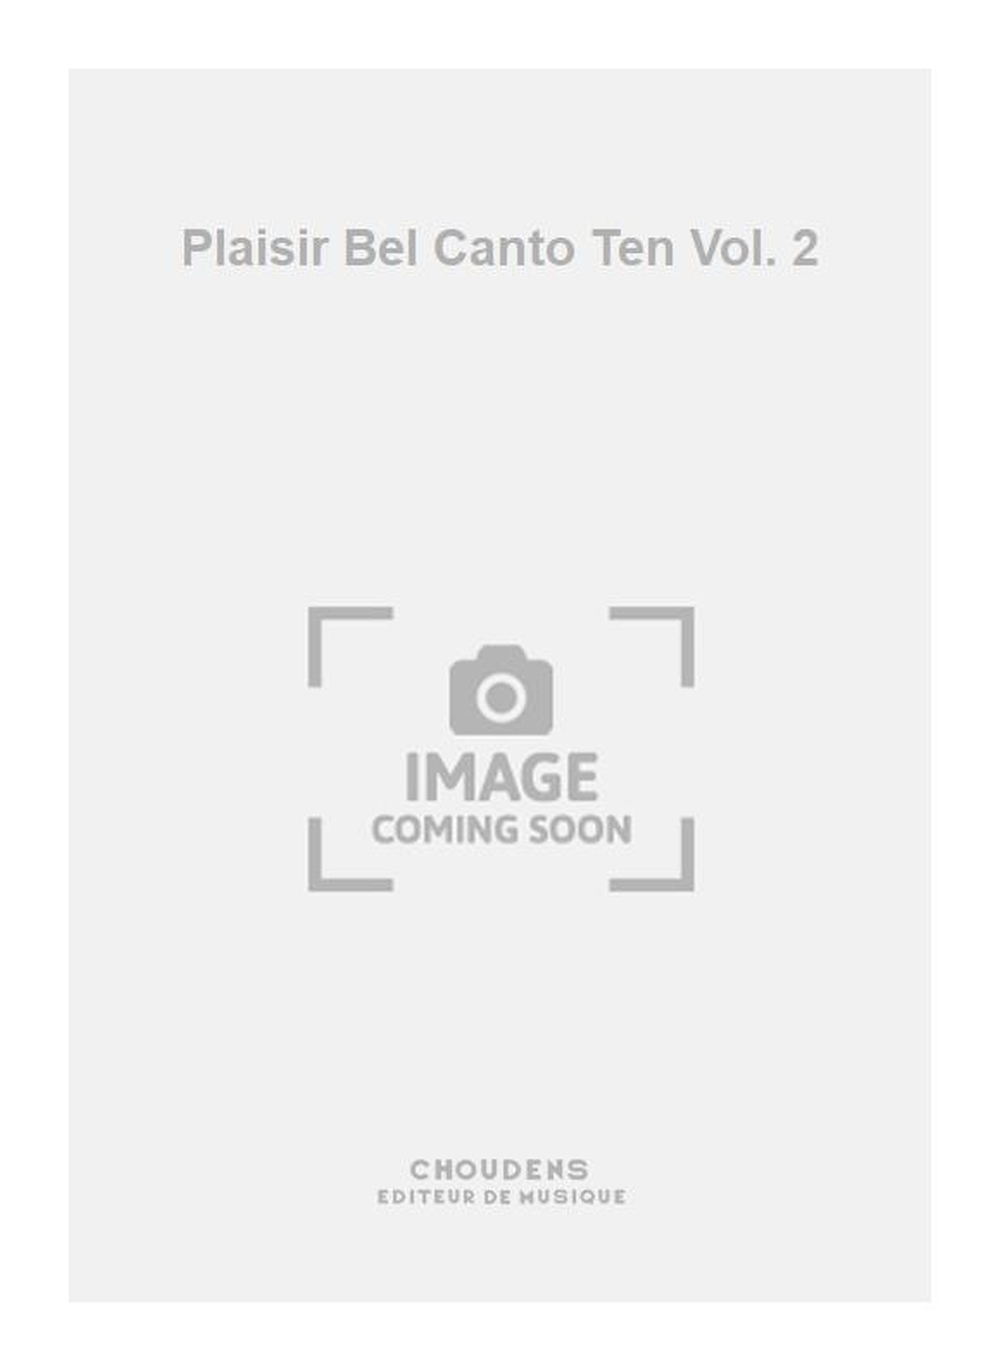 Plaisir Bel Canto Ten Vol. 2